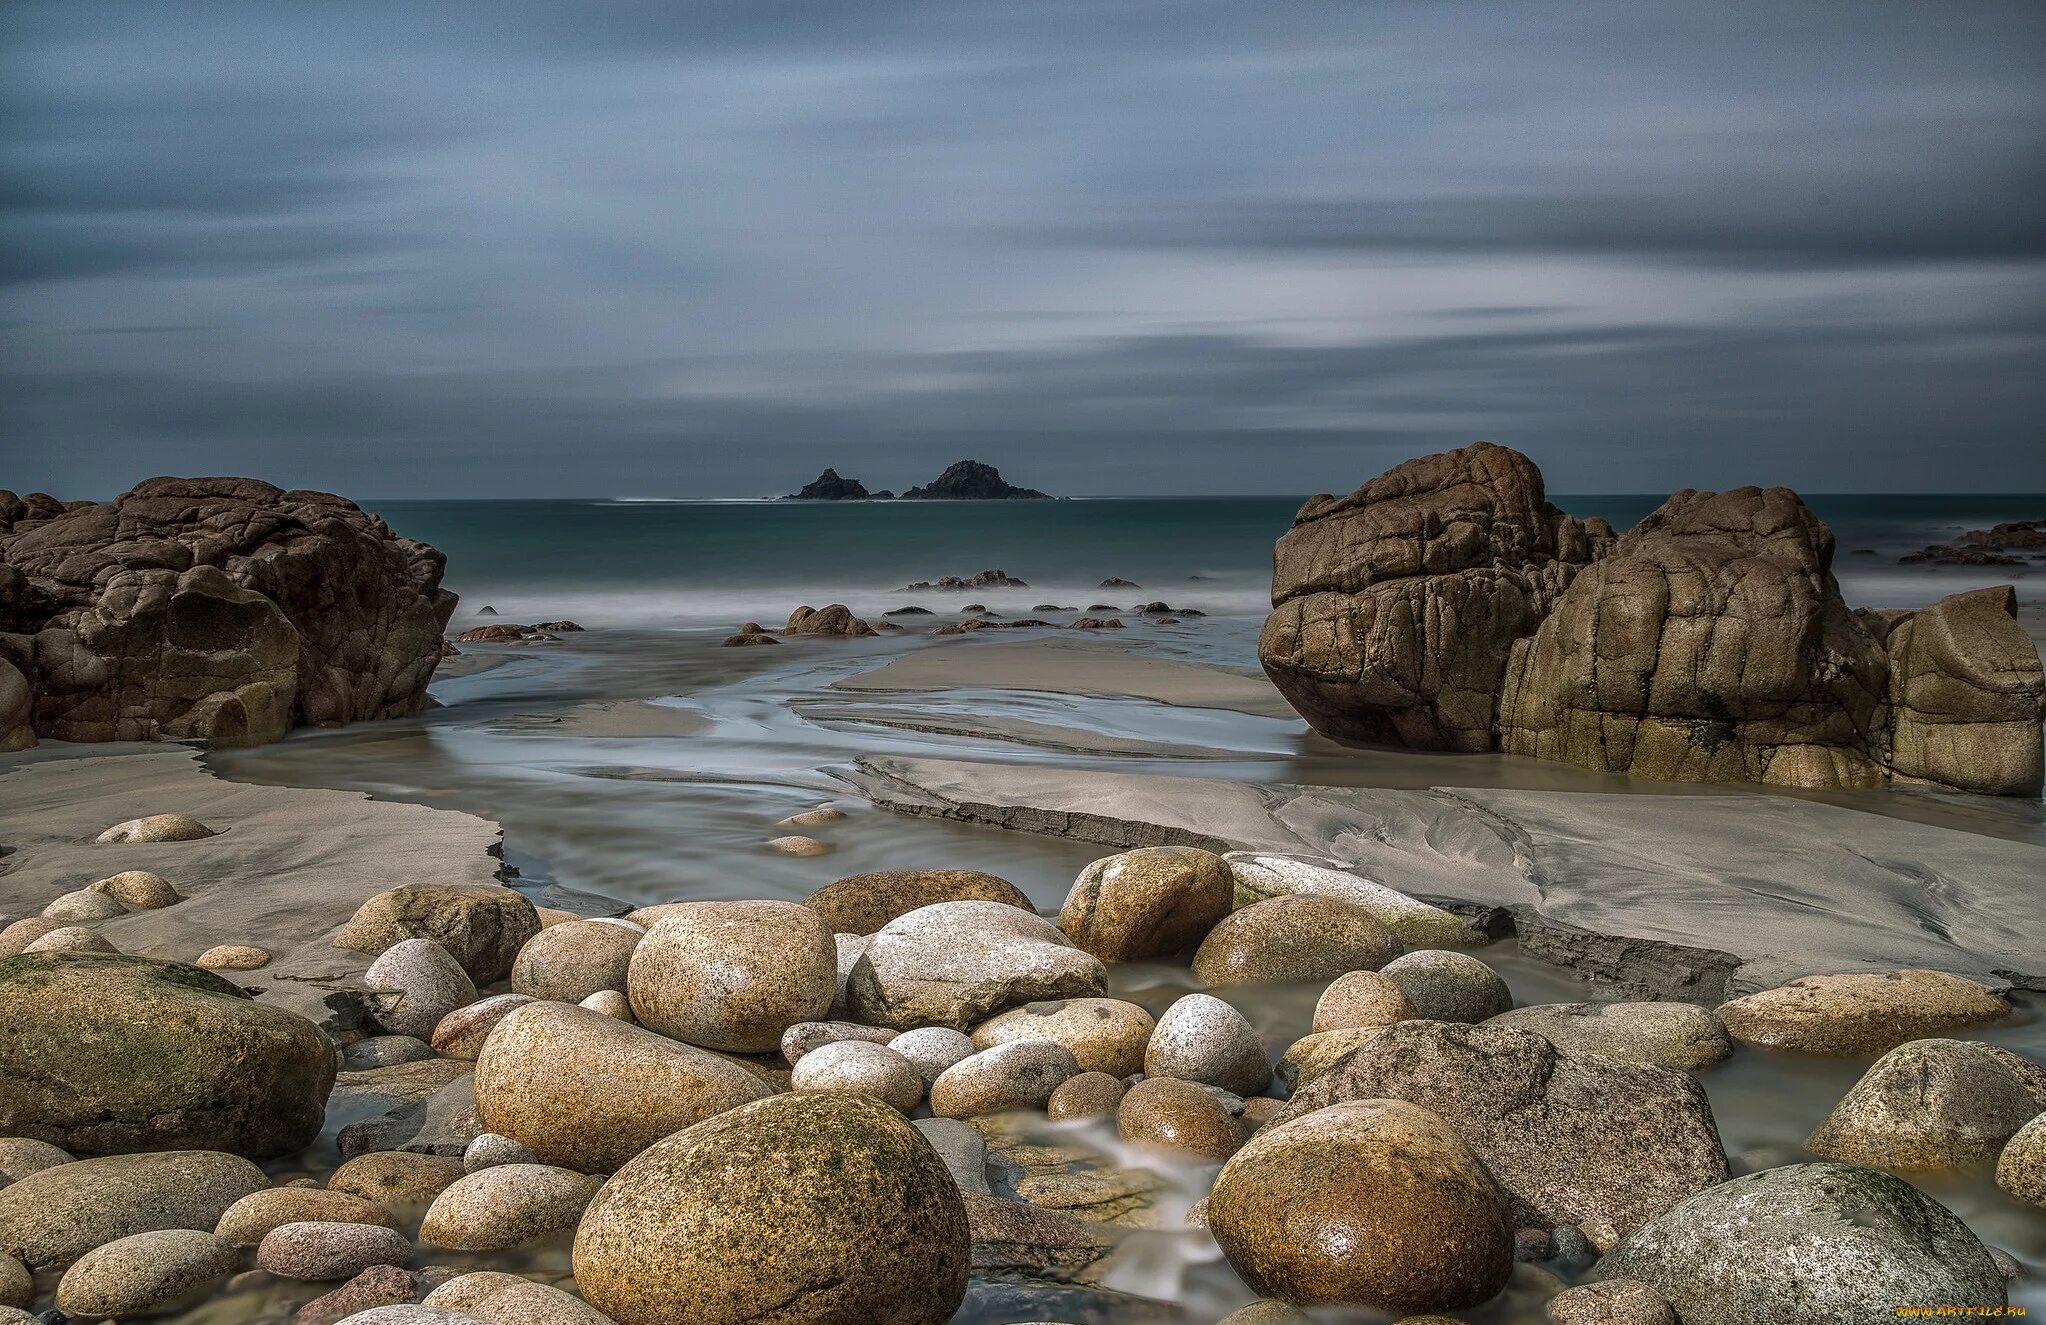 Камни на берегу моря. Каменный берег моря. Валуны на берегу моря. Каменистый пляж.